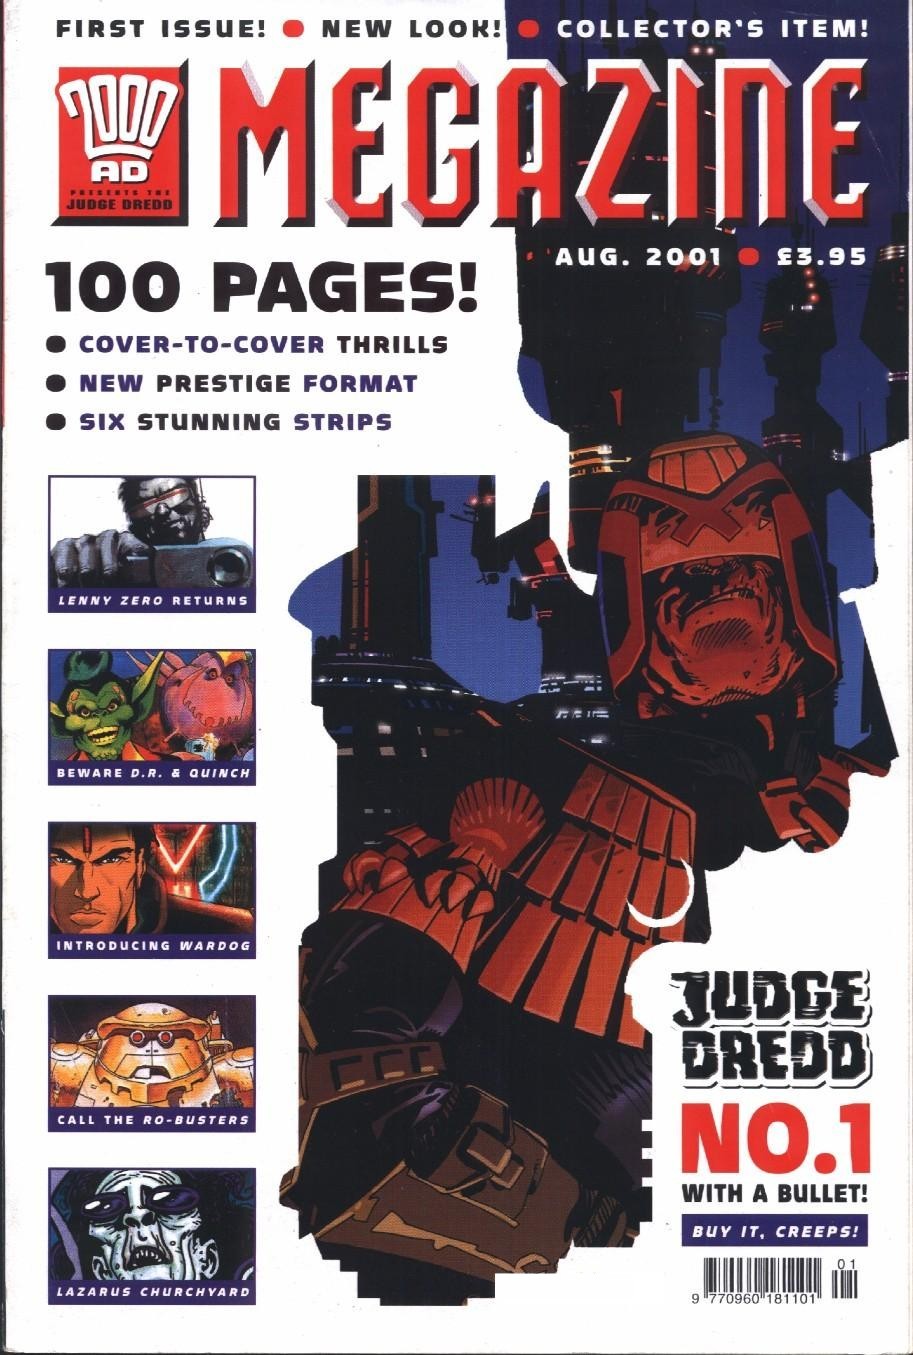 Judge Dredd Megazine (vol. 4) issue 1 - Page 1